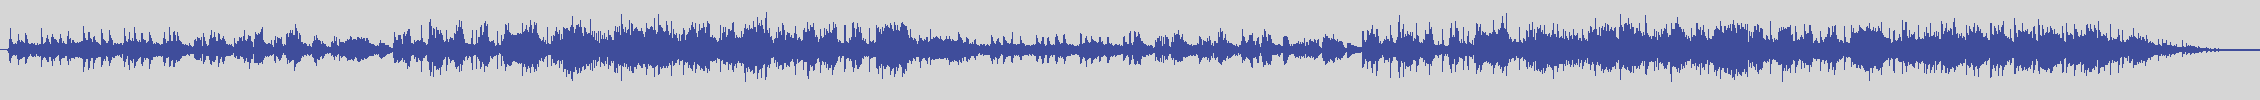 digiphonic_records [DPR001] Nino D'Angelo - Busciarda Tu [Original Mix] audio wave form